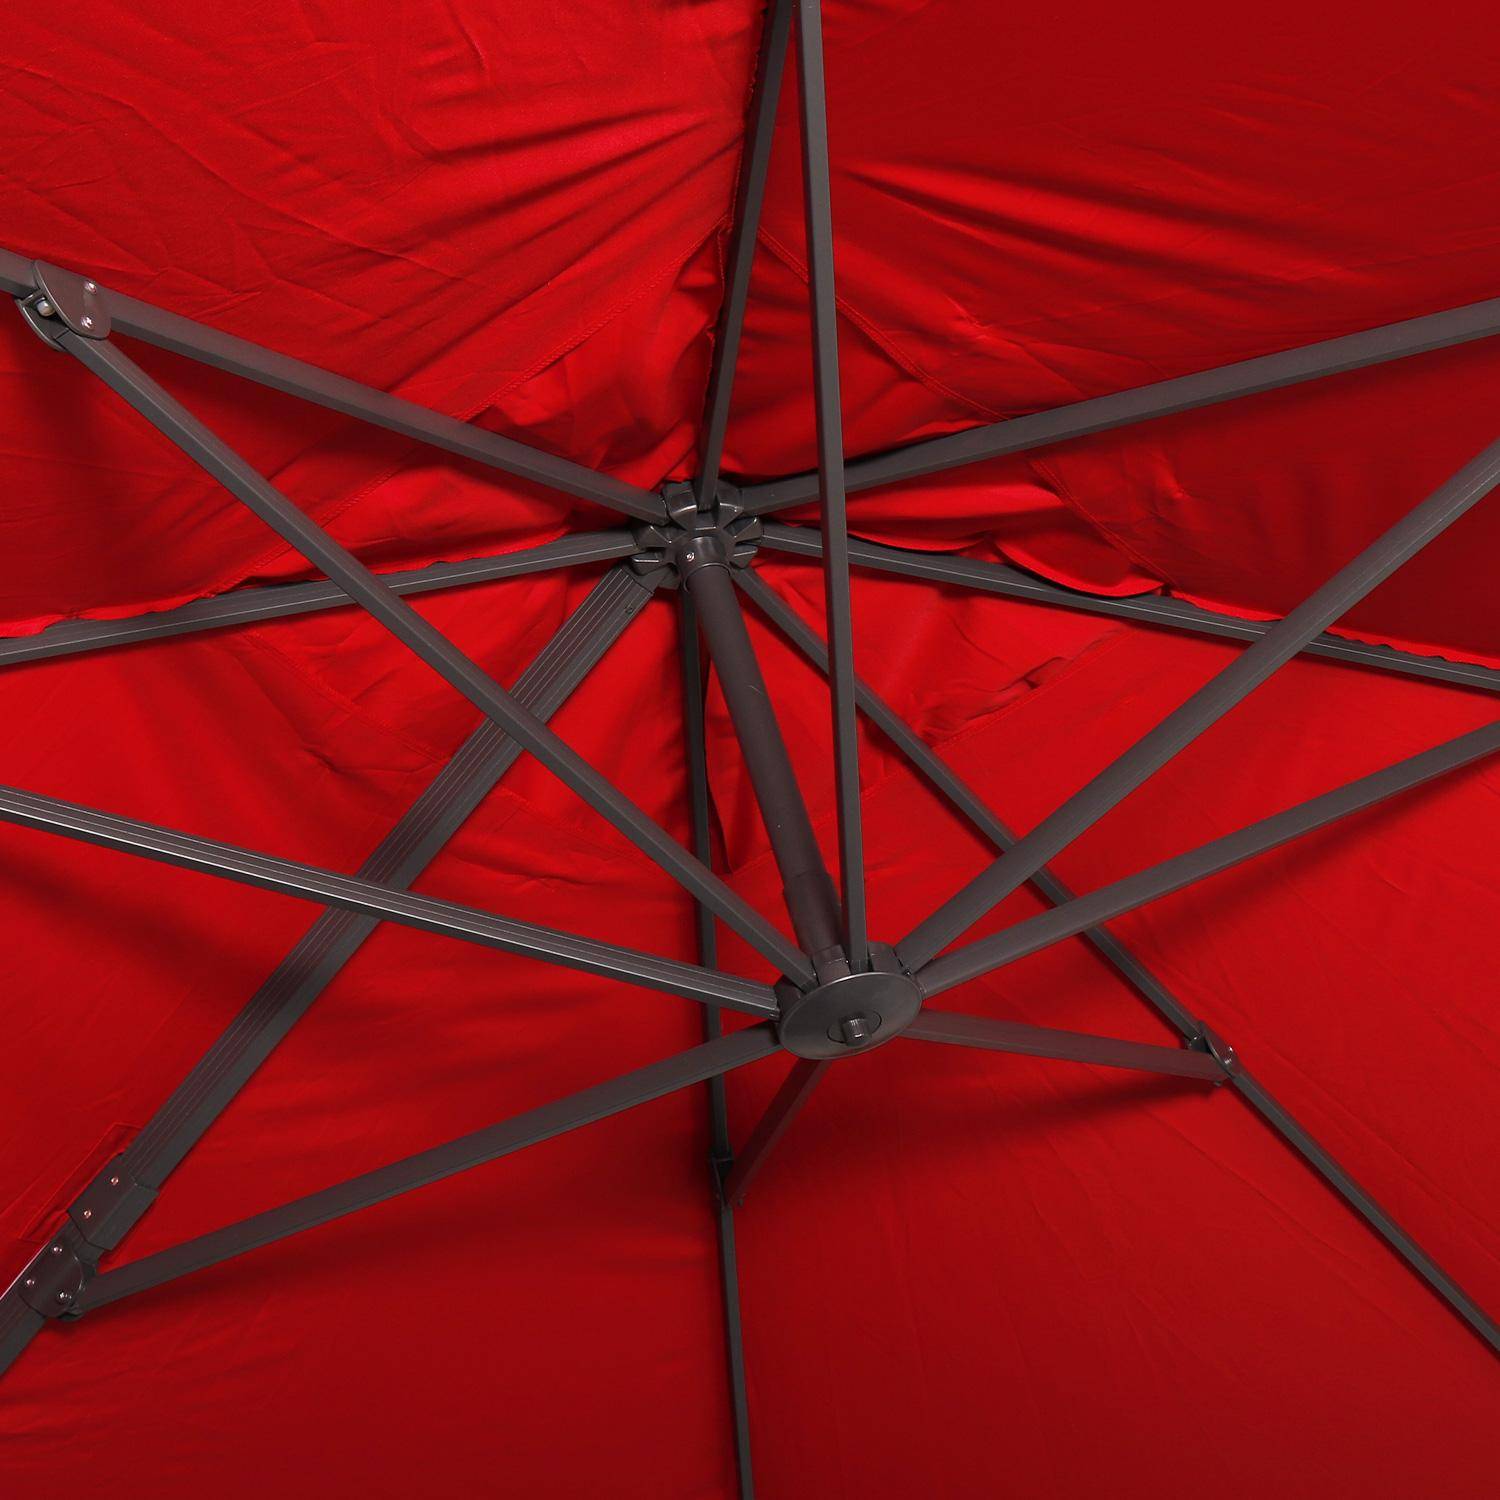 Rode rechthoekige parasol 3x4m + verzwaarde tegels 50x50cm,sweeek,Photo4